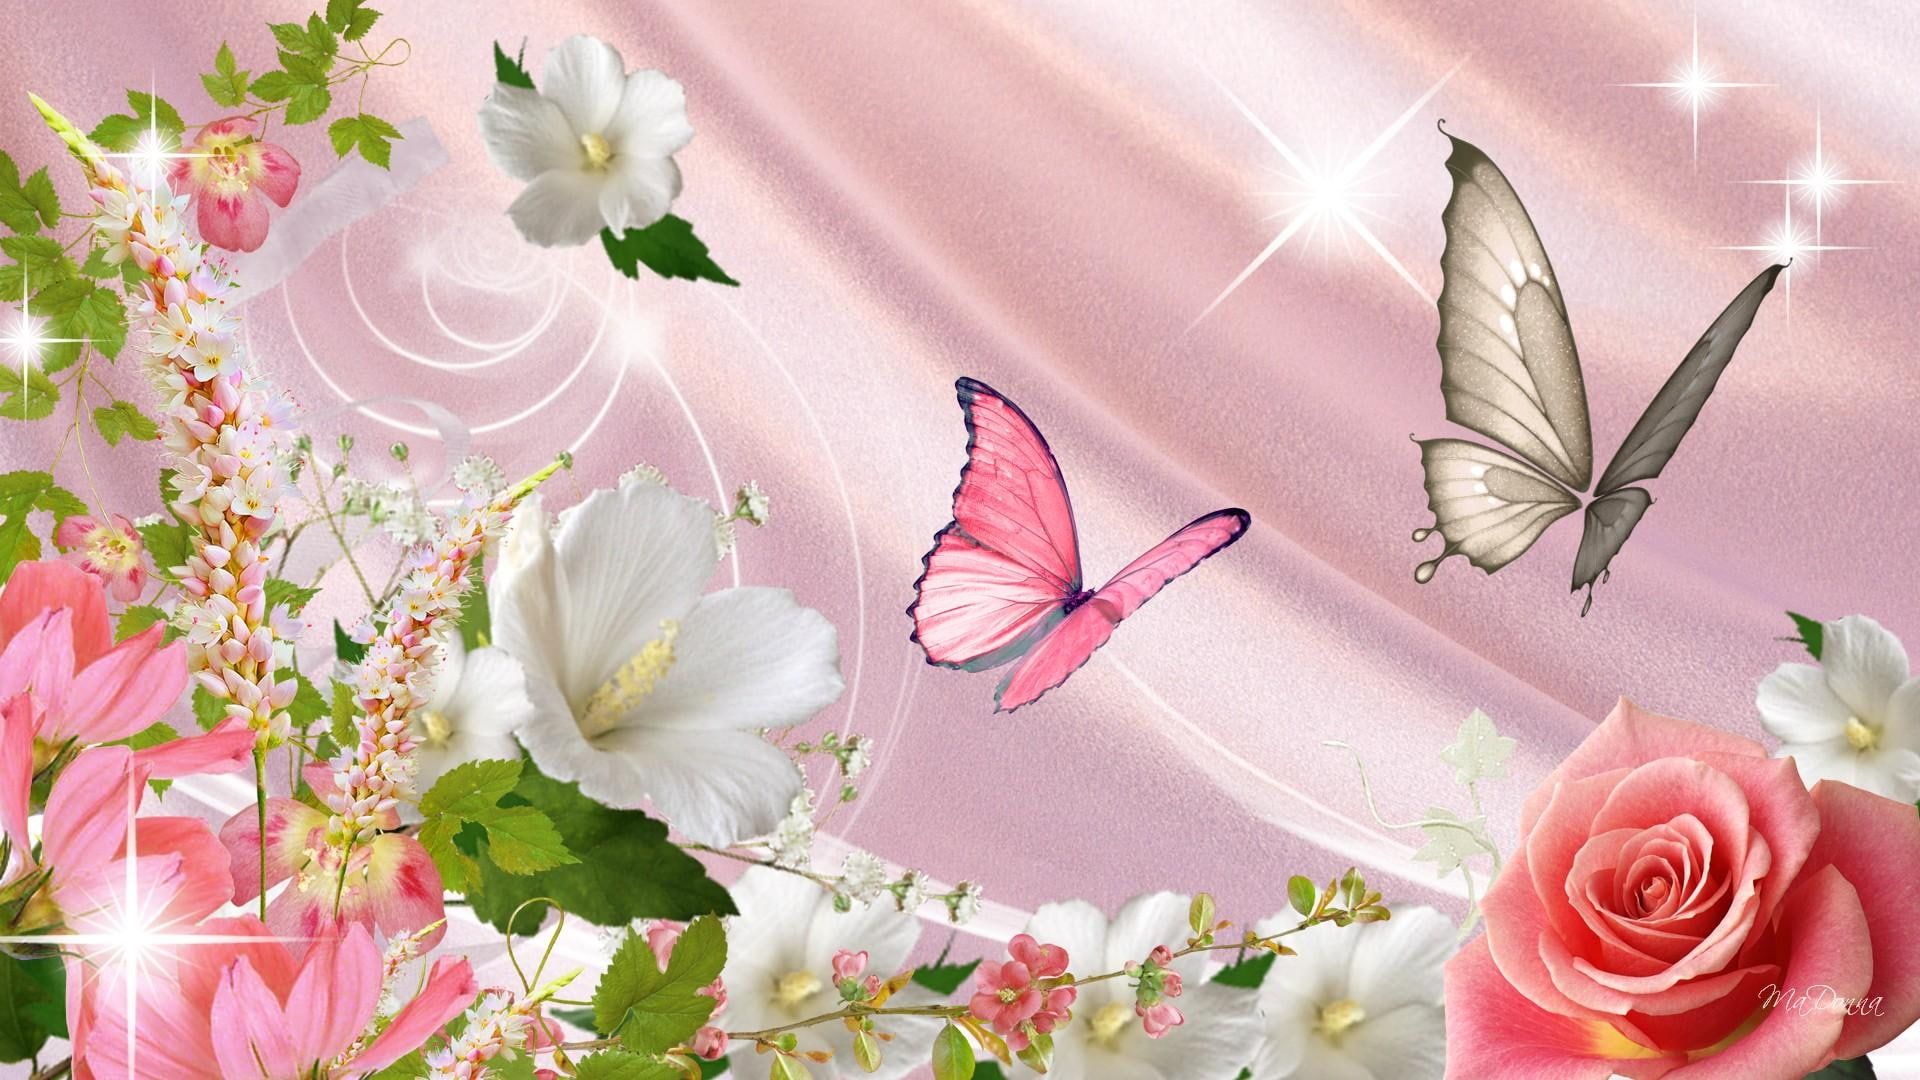 Abundance Of Flowers, flowers and butterflies wallpaper #roses #stars #vine #flowers #spring pink. Heureux anniversaire, Fond ecran nature, Papier peint à fleurs